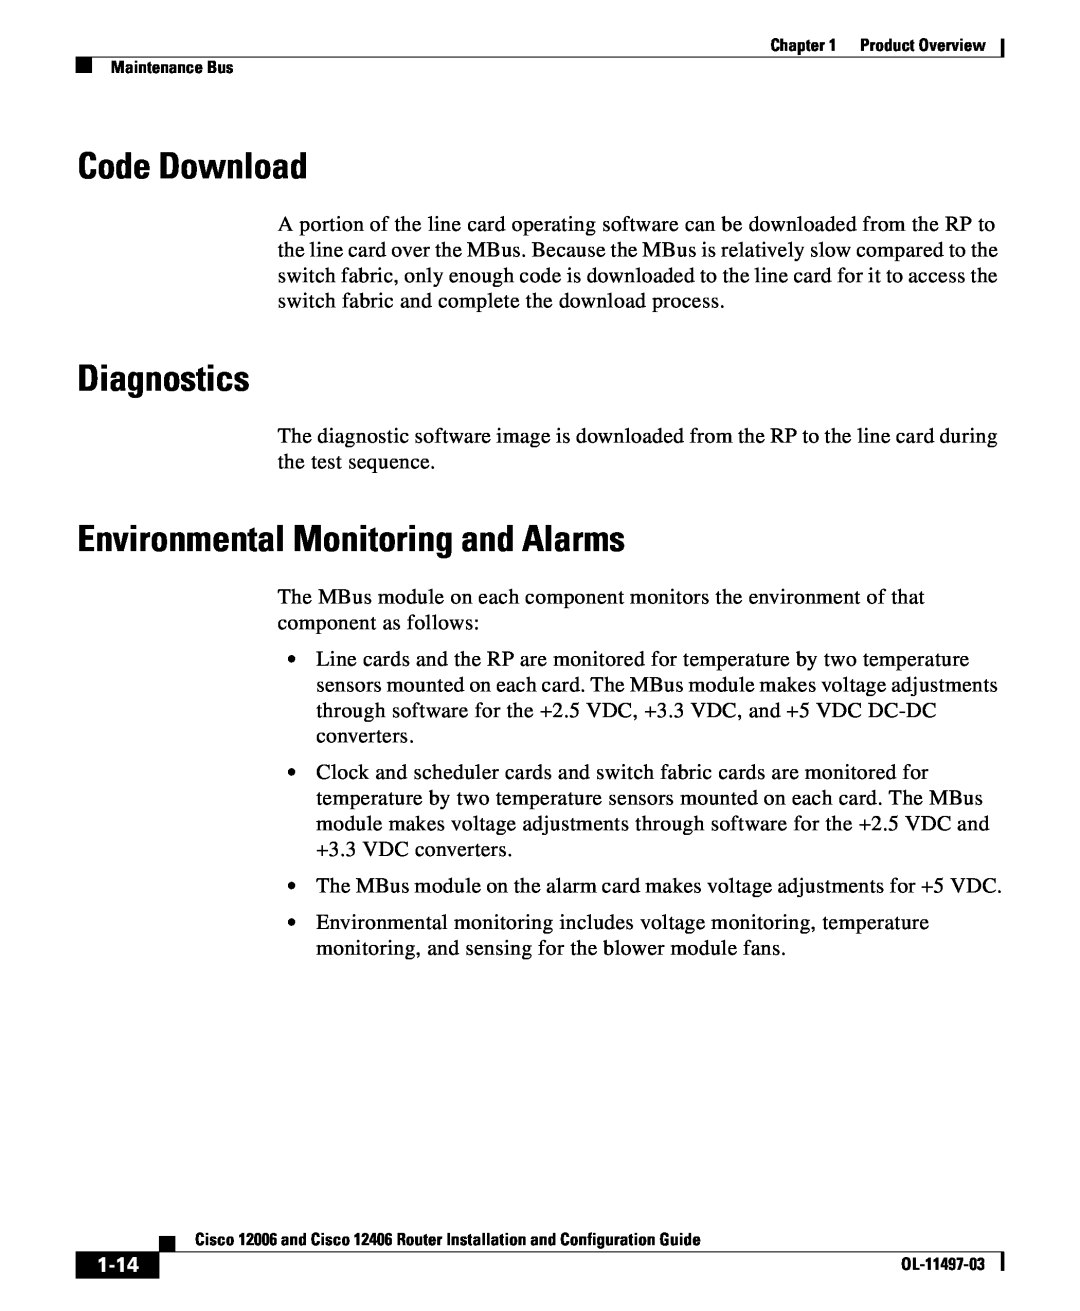 Cisco Systems 12406 series, 12006 series manual Code Download, Diagnostics, Environmental Monitoring and Alarms, 1-14 